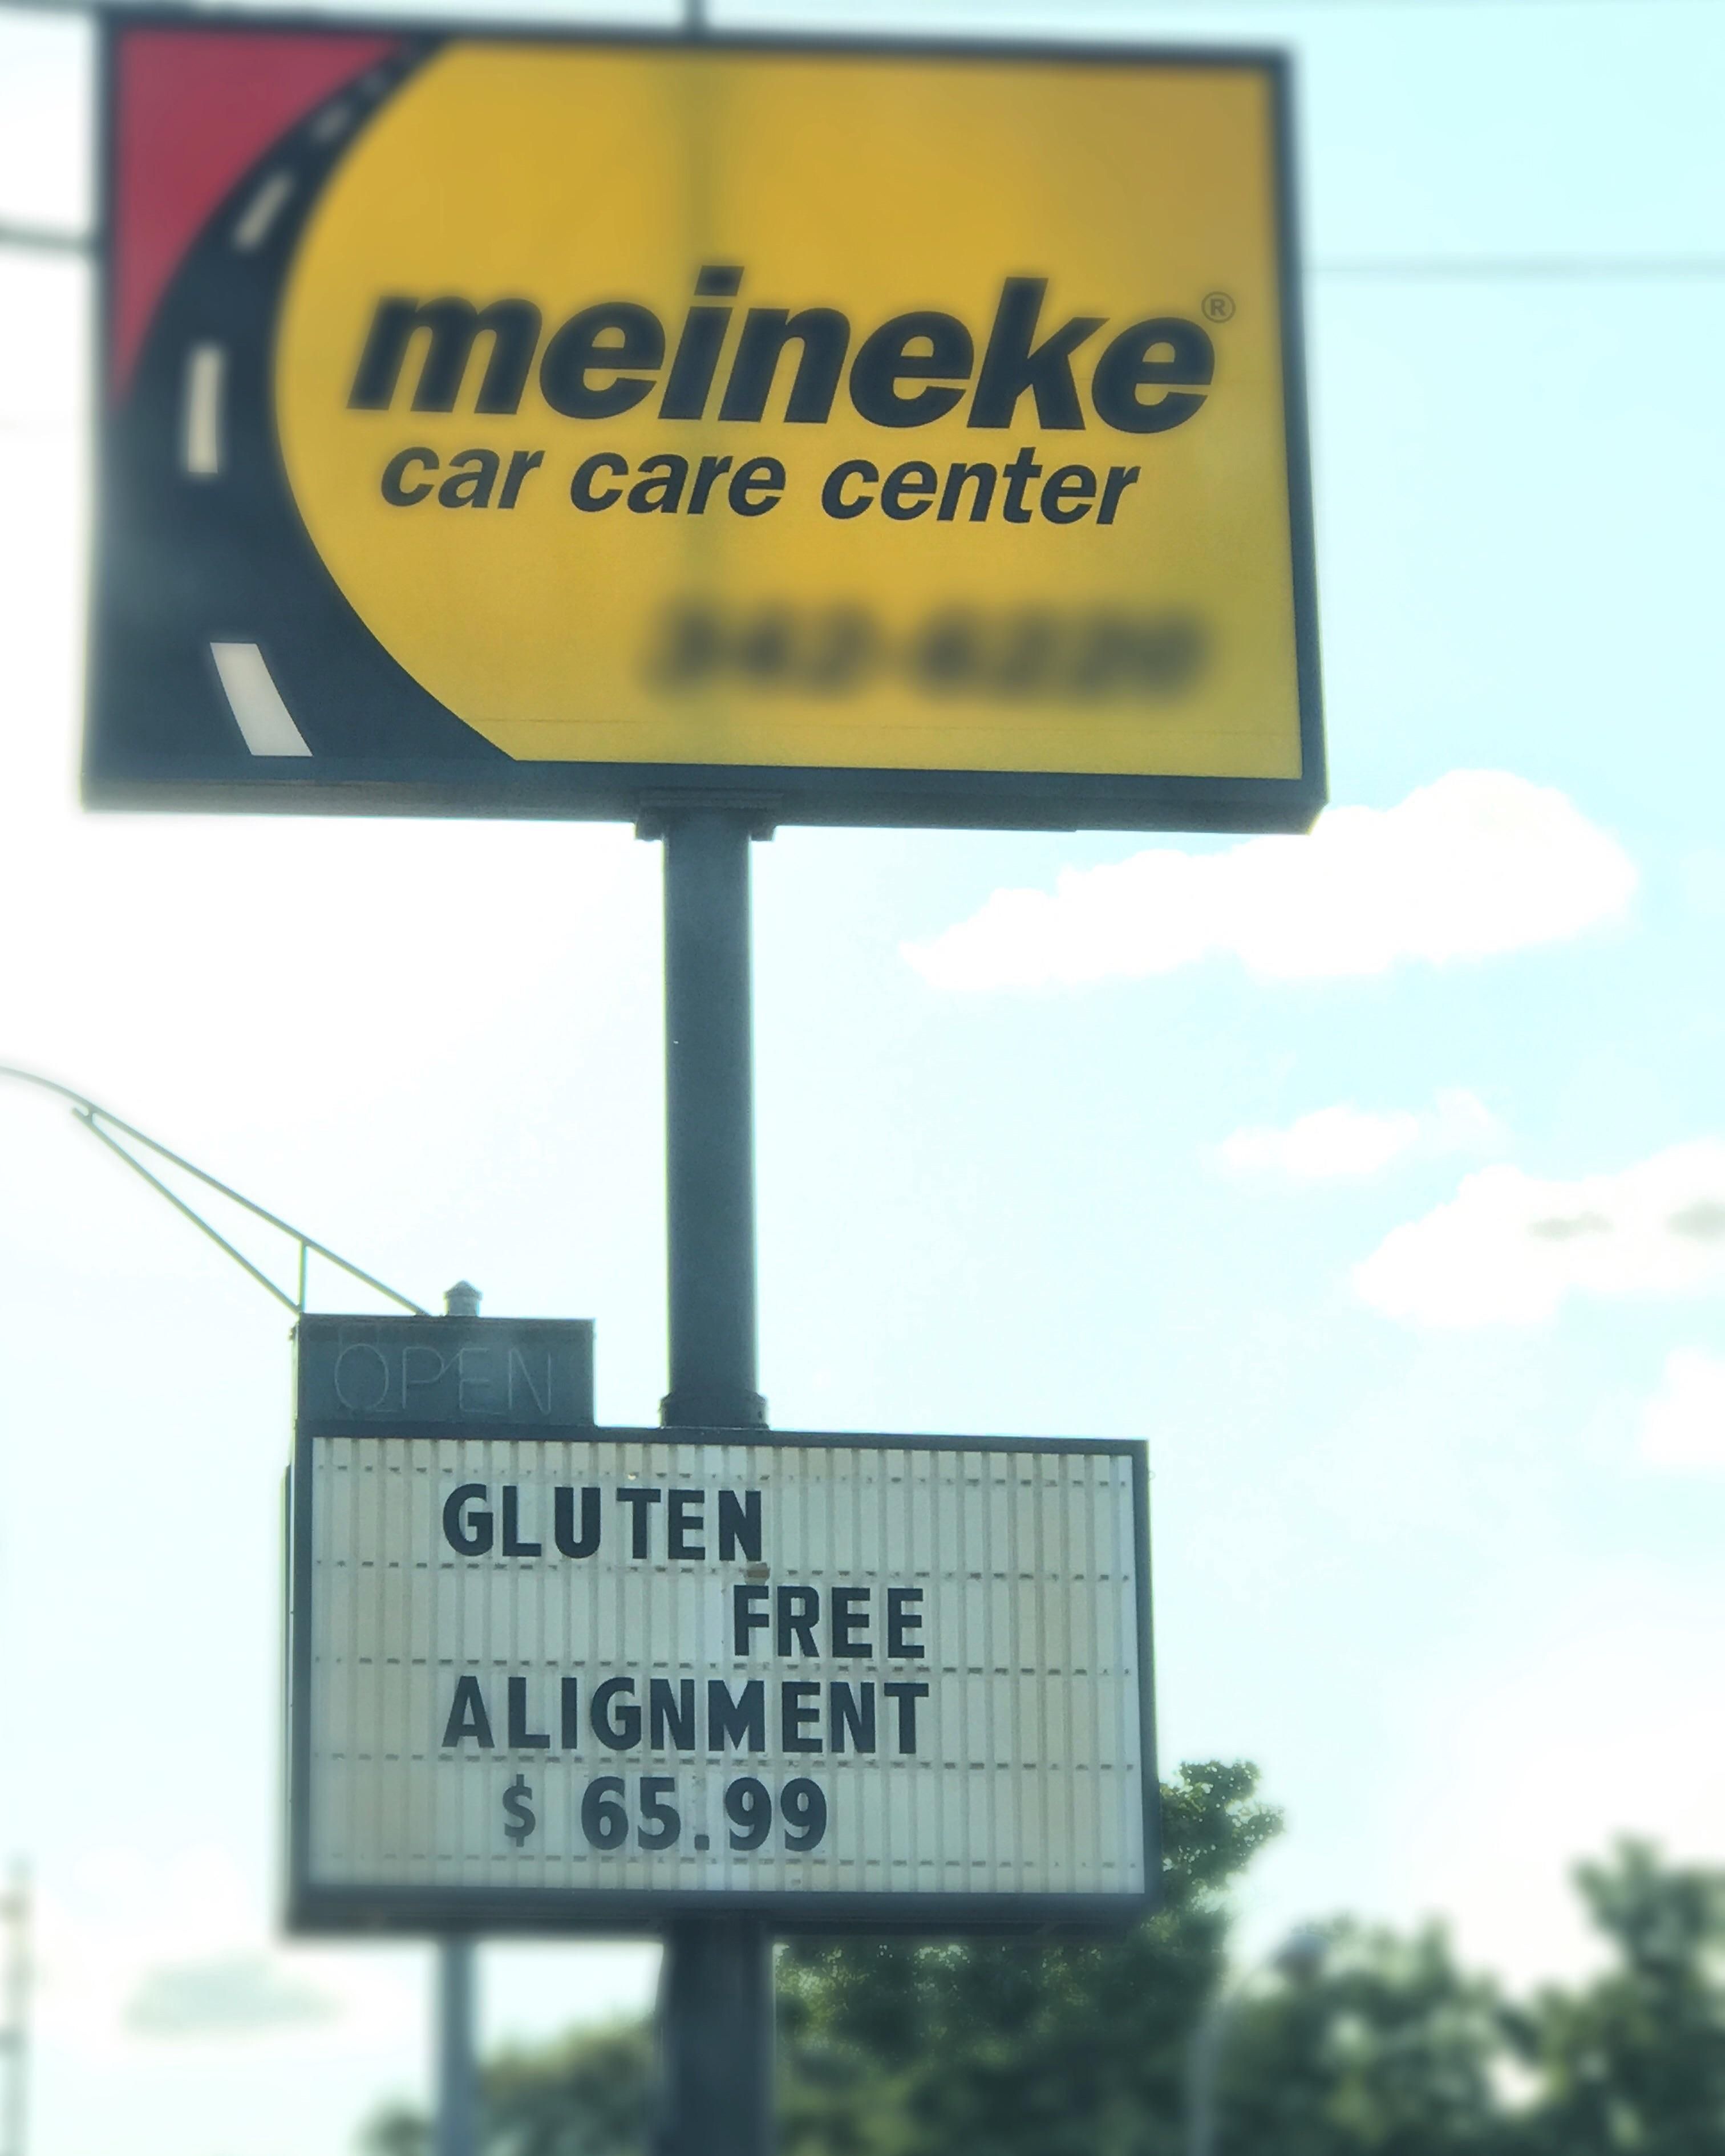 meineke car care center - meineke car care center Gluten Free Alignment $ 65.99